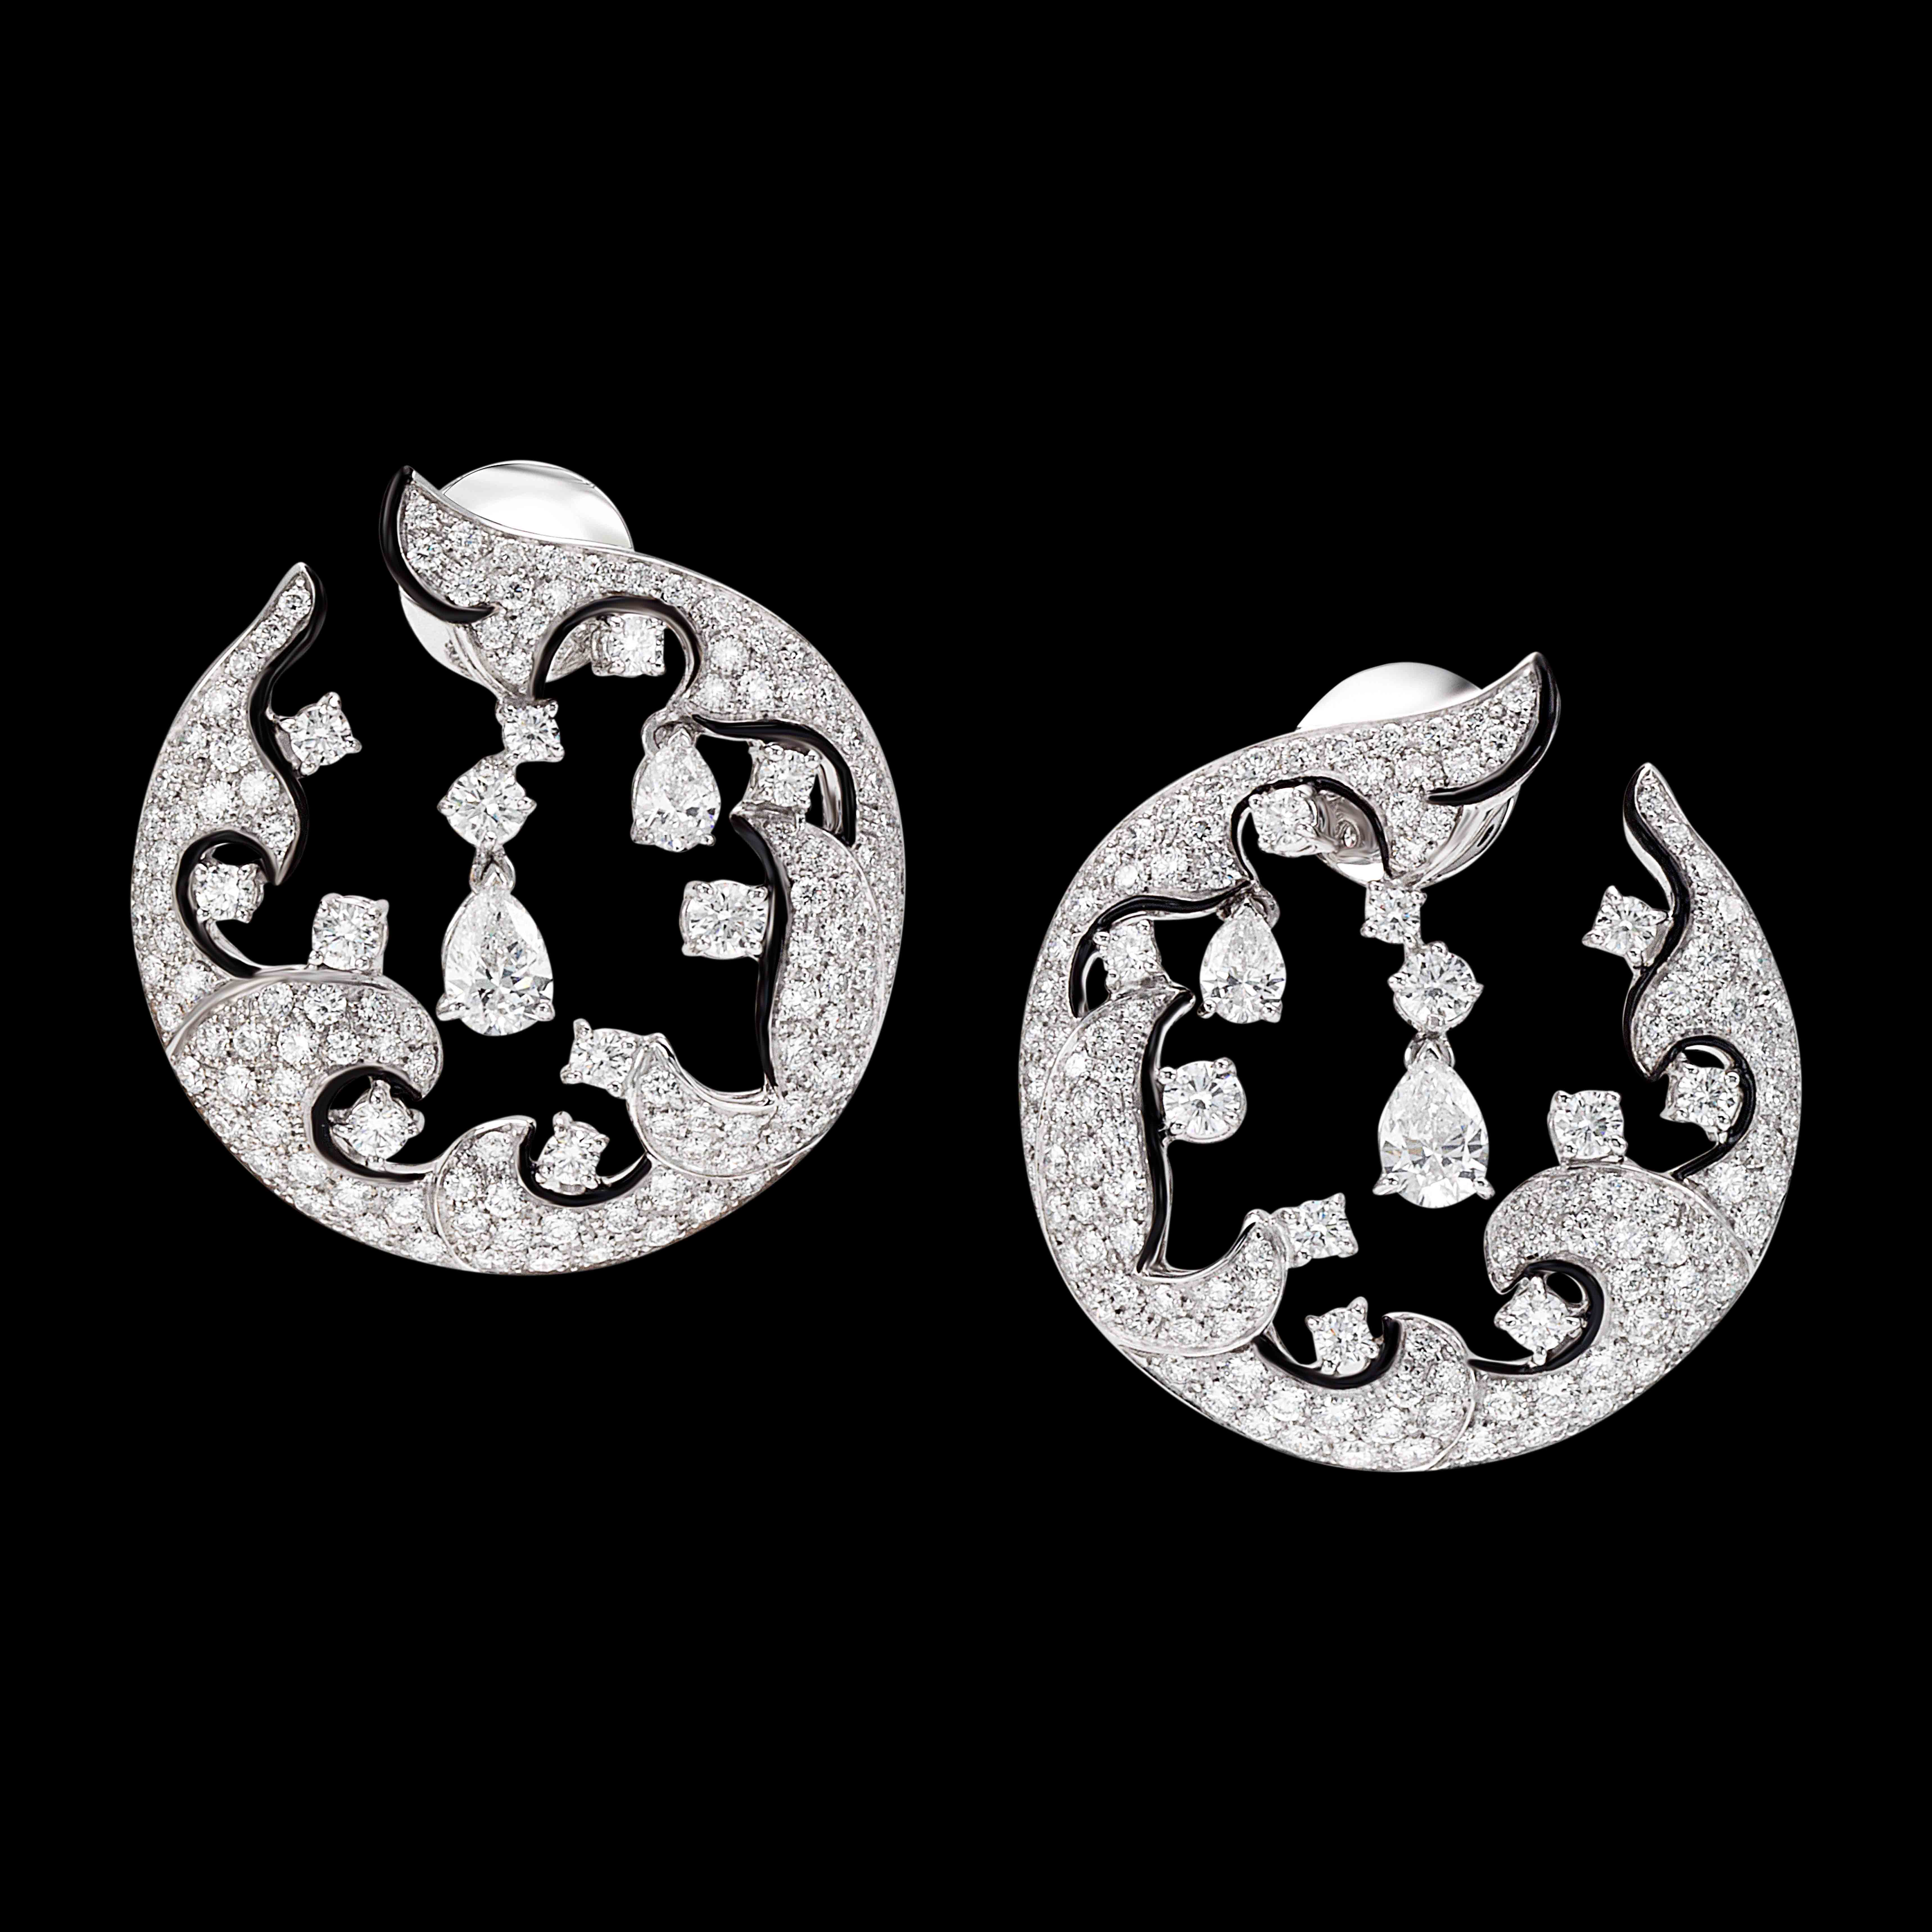 PO 1281 BR massimo raiteri exclusive jewellery desing earring diamonds gioielli